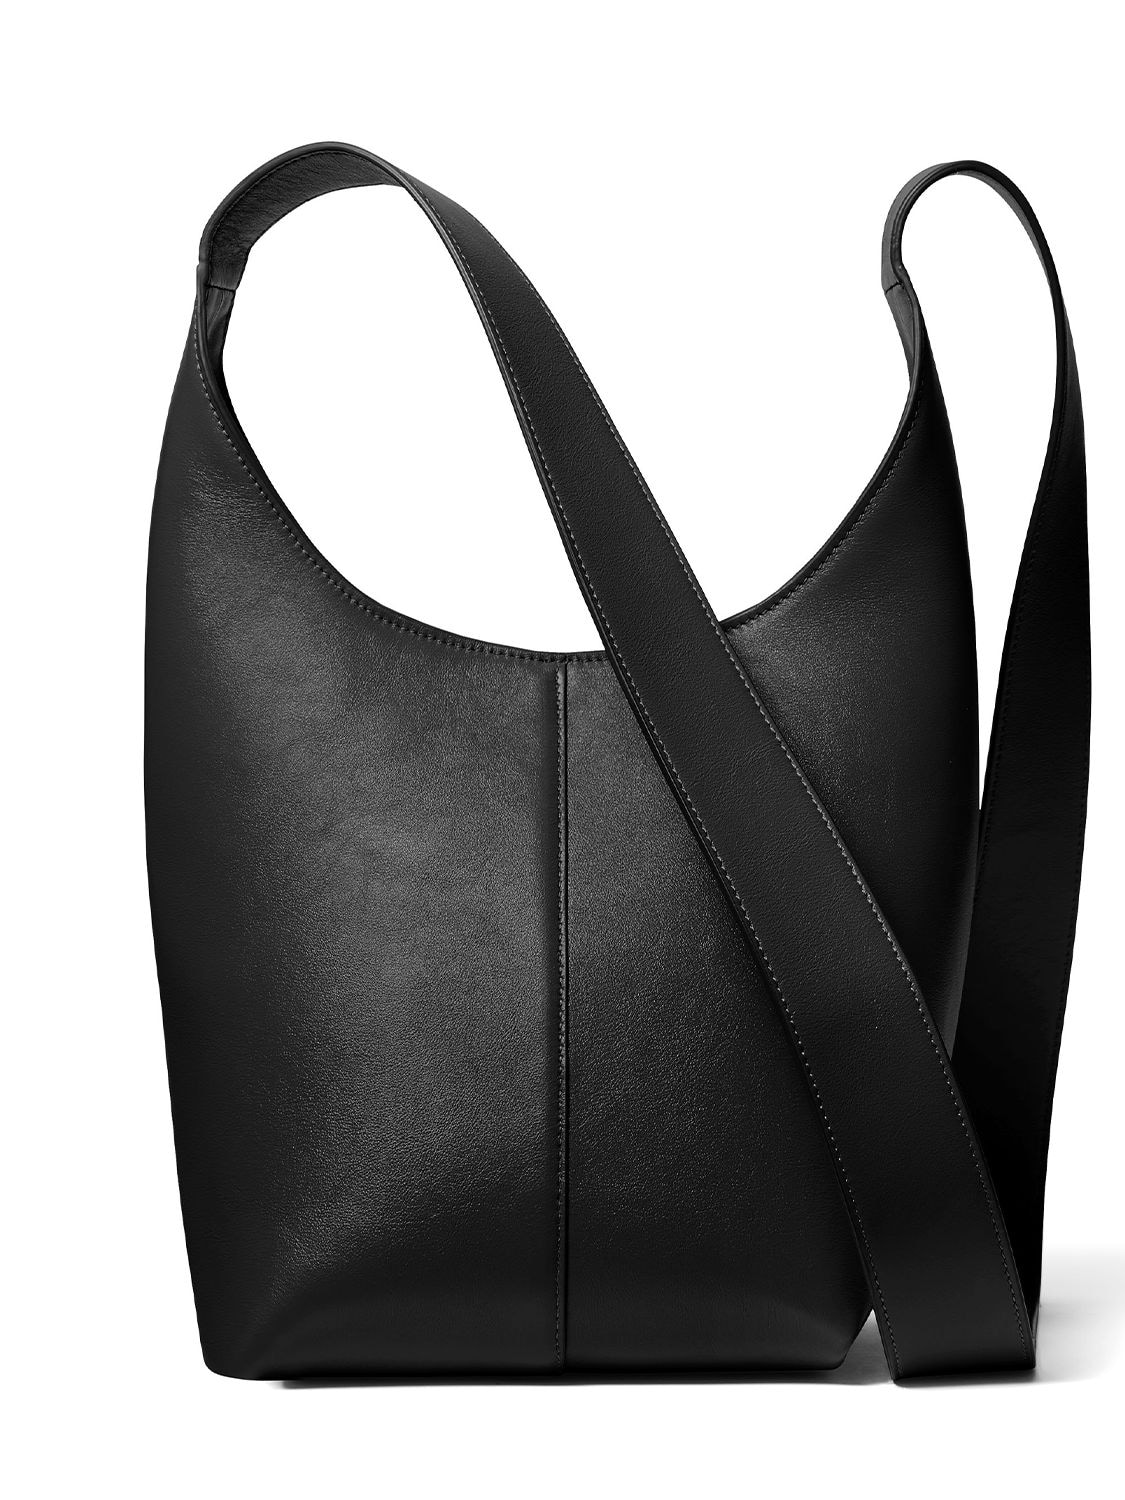 Image of Mini Dede Leather Hobo Bag